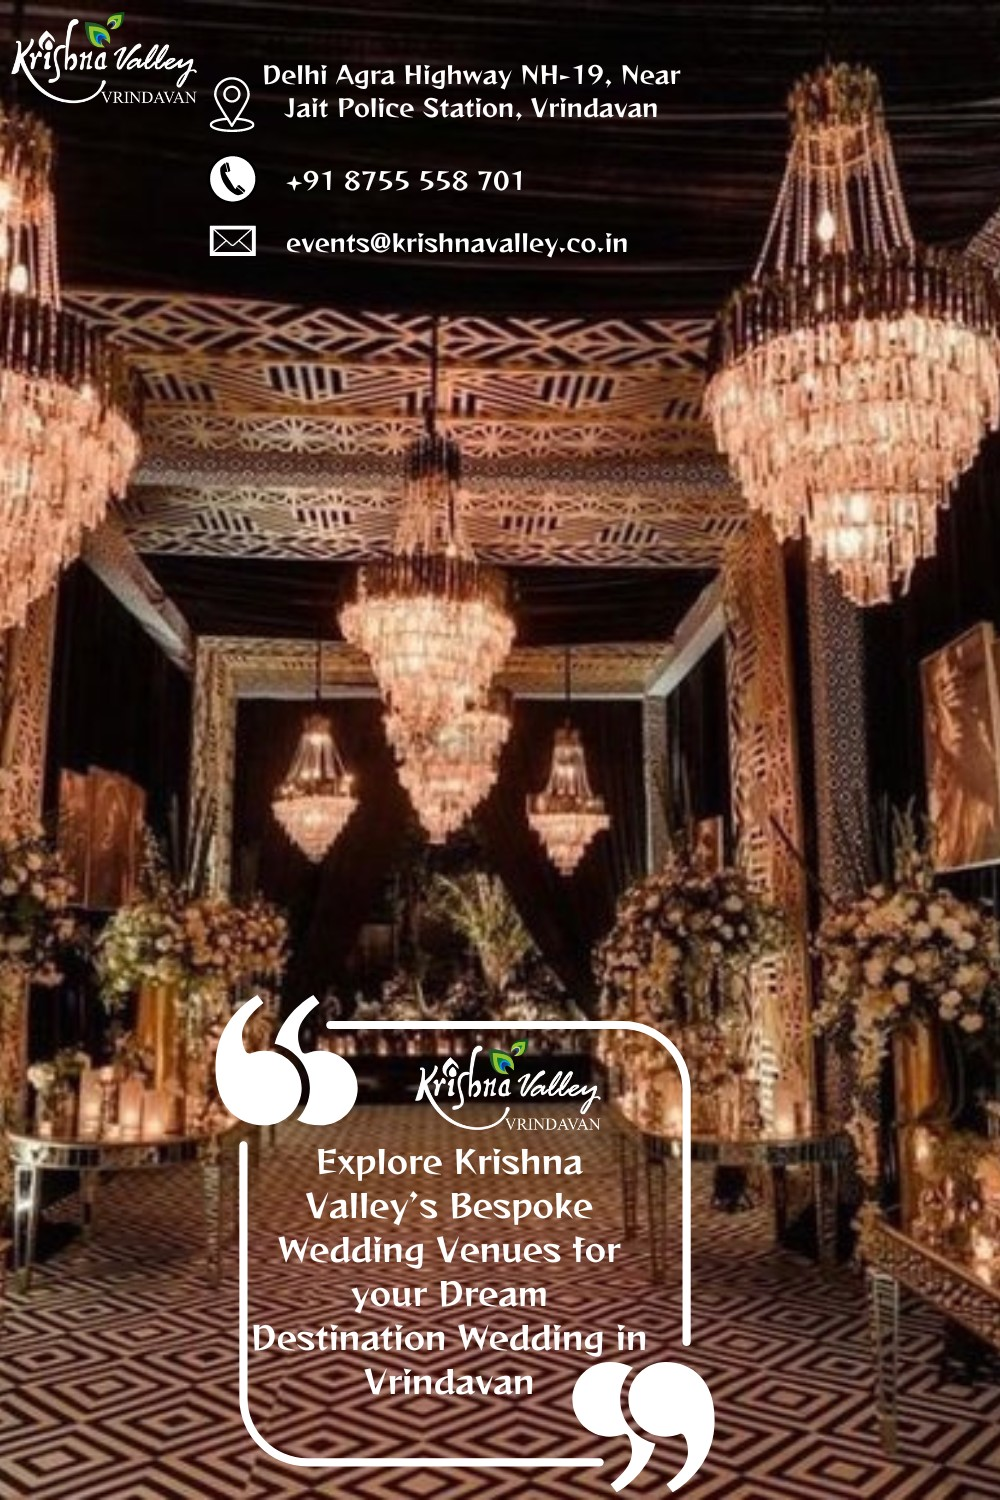 Krishna Valley Resort for Destination Wedding in Vrindavan